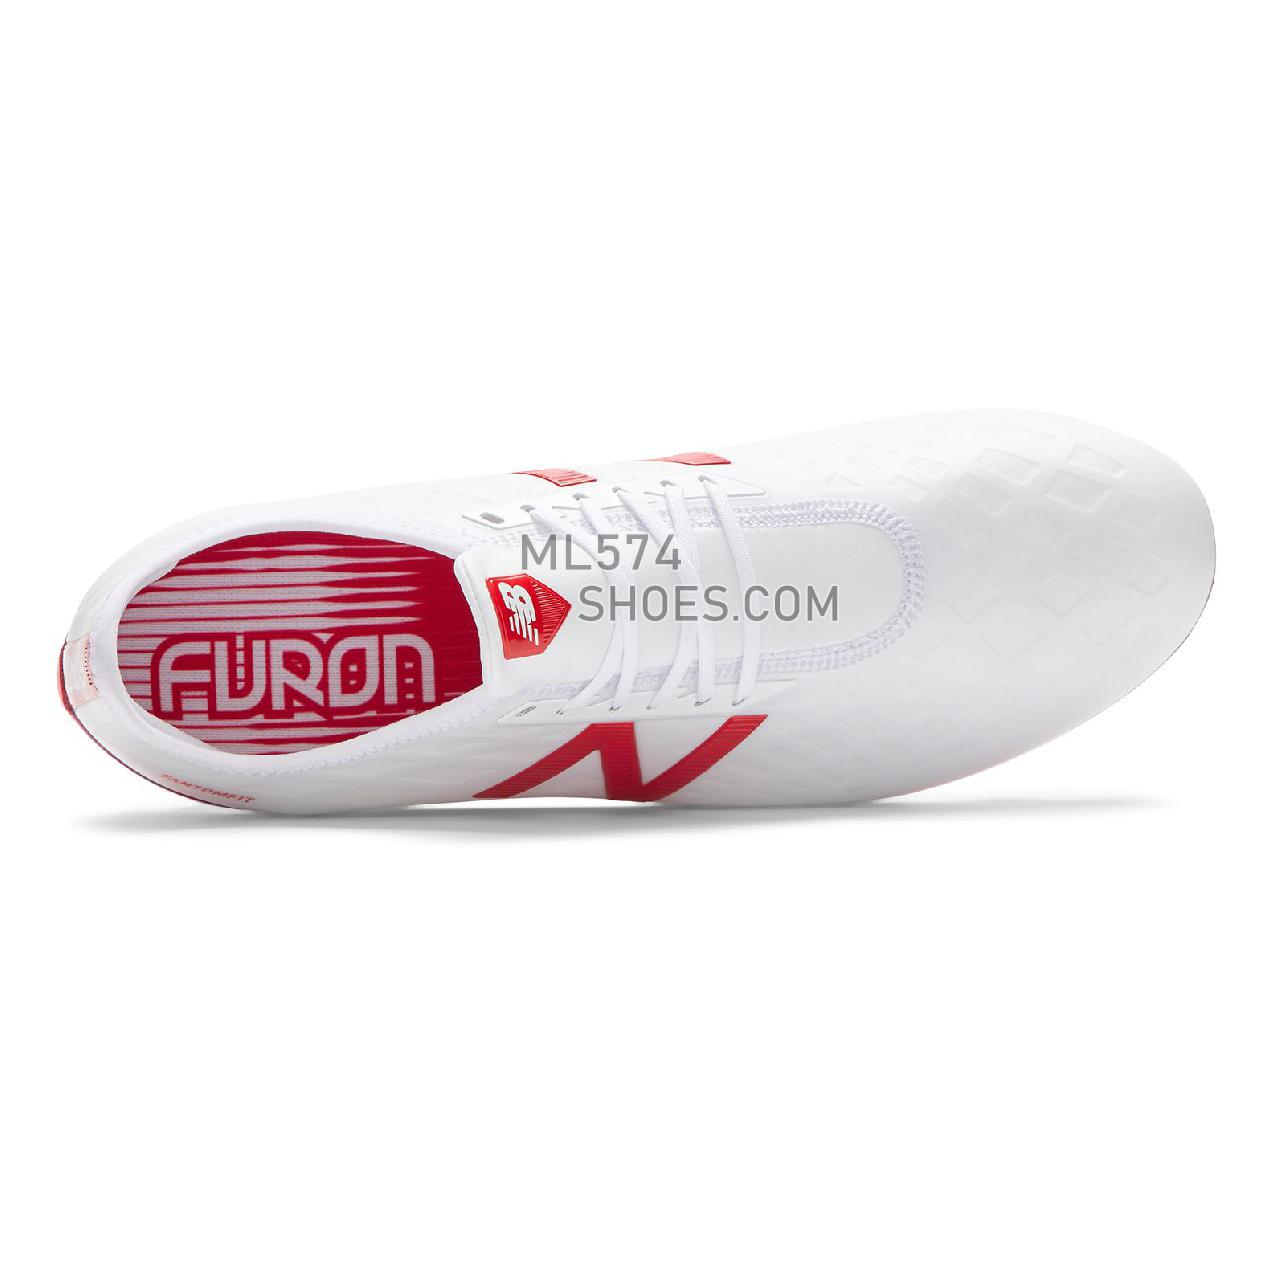 New Balance Furon v4 Pro FG - Men's Furon 4.0 Pro FG Football - White with Flame - MSFPFWF4